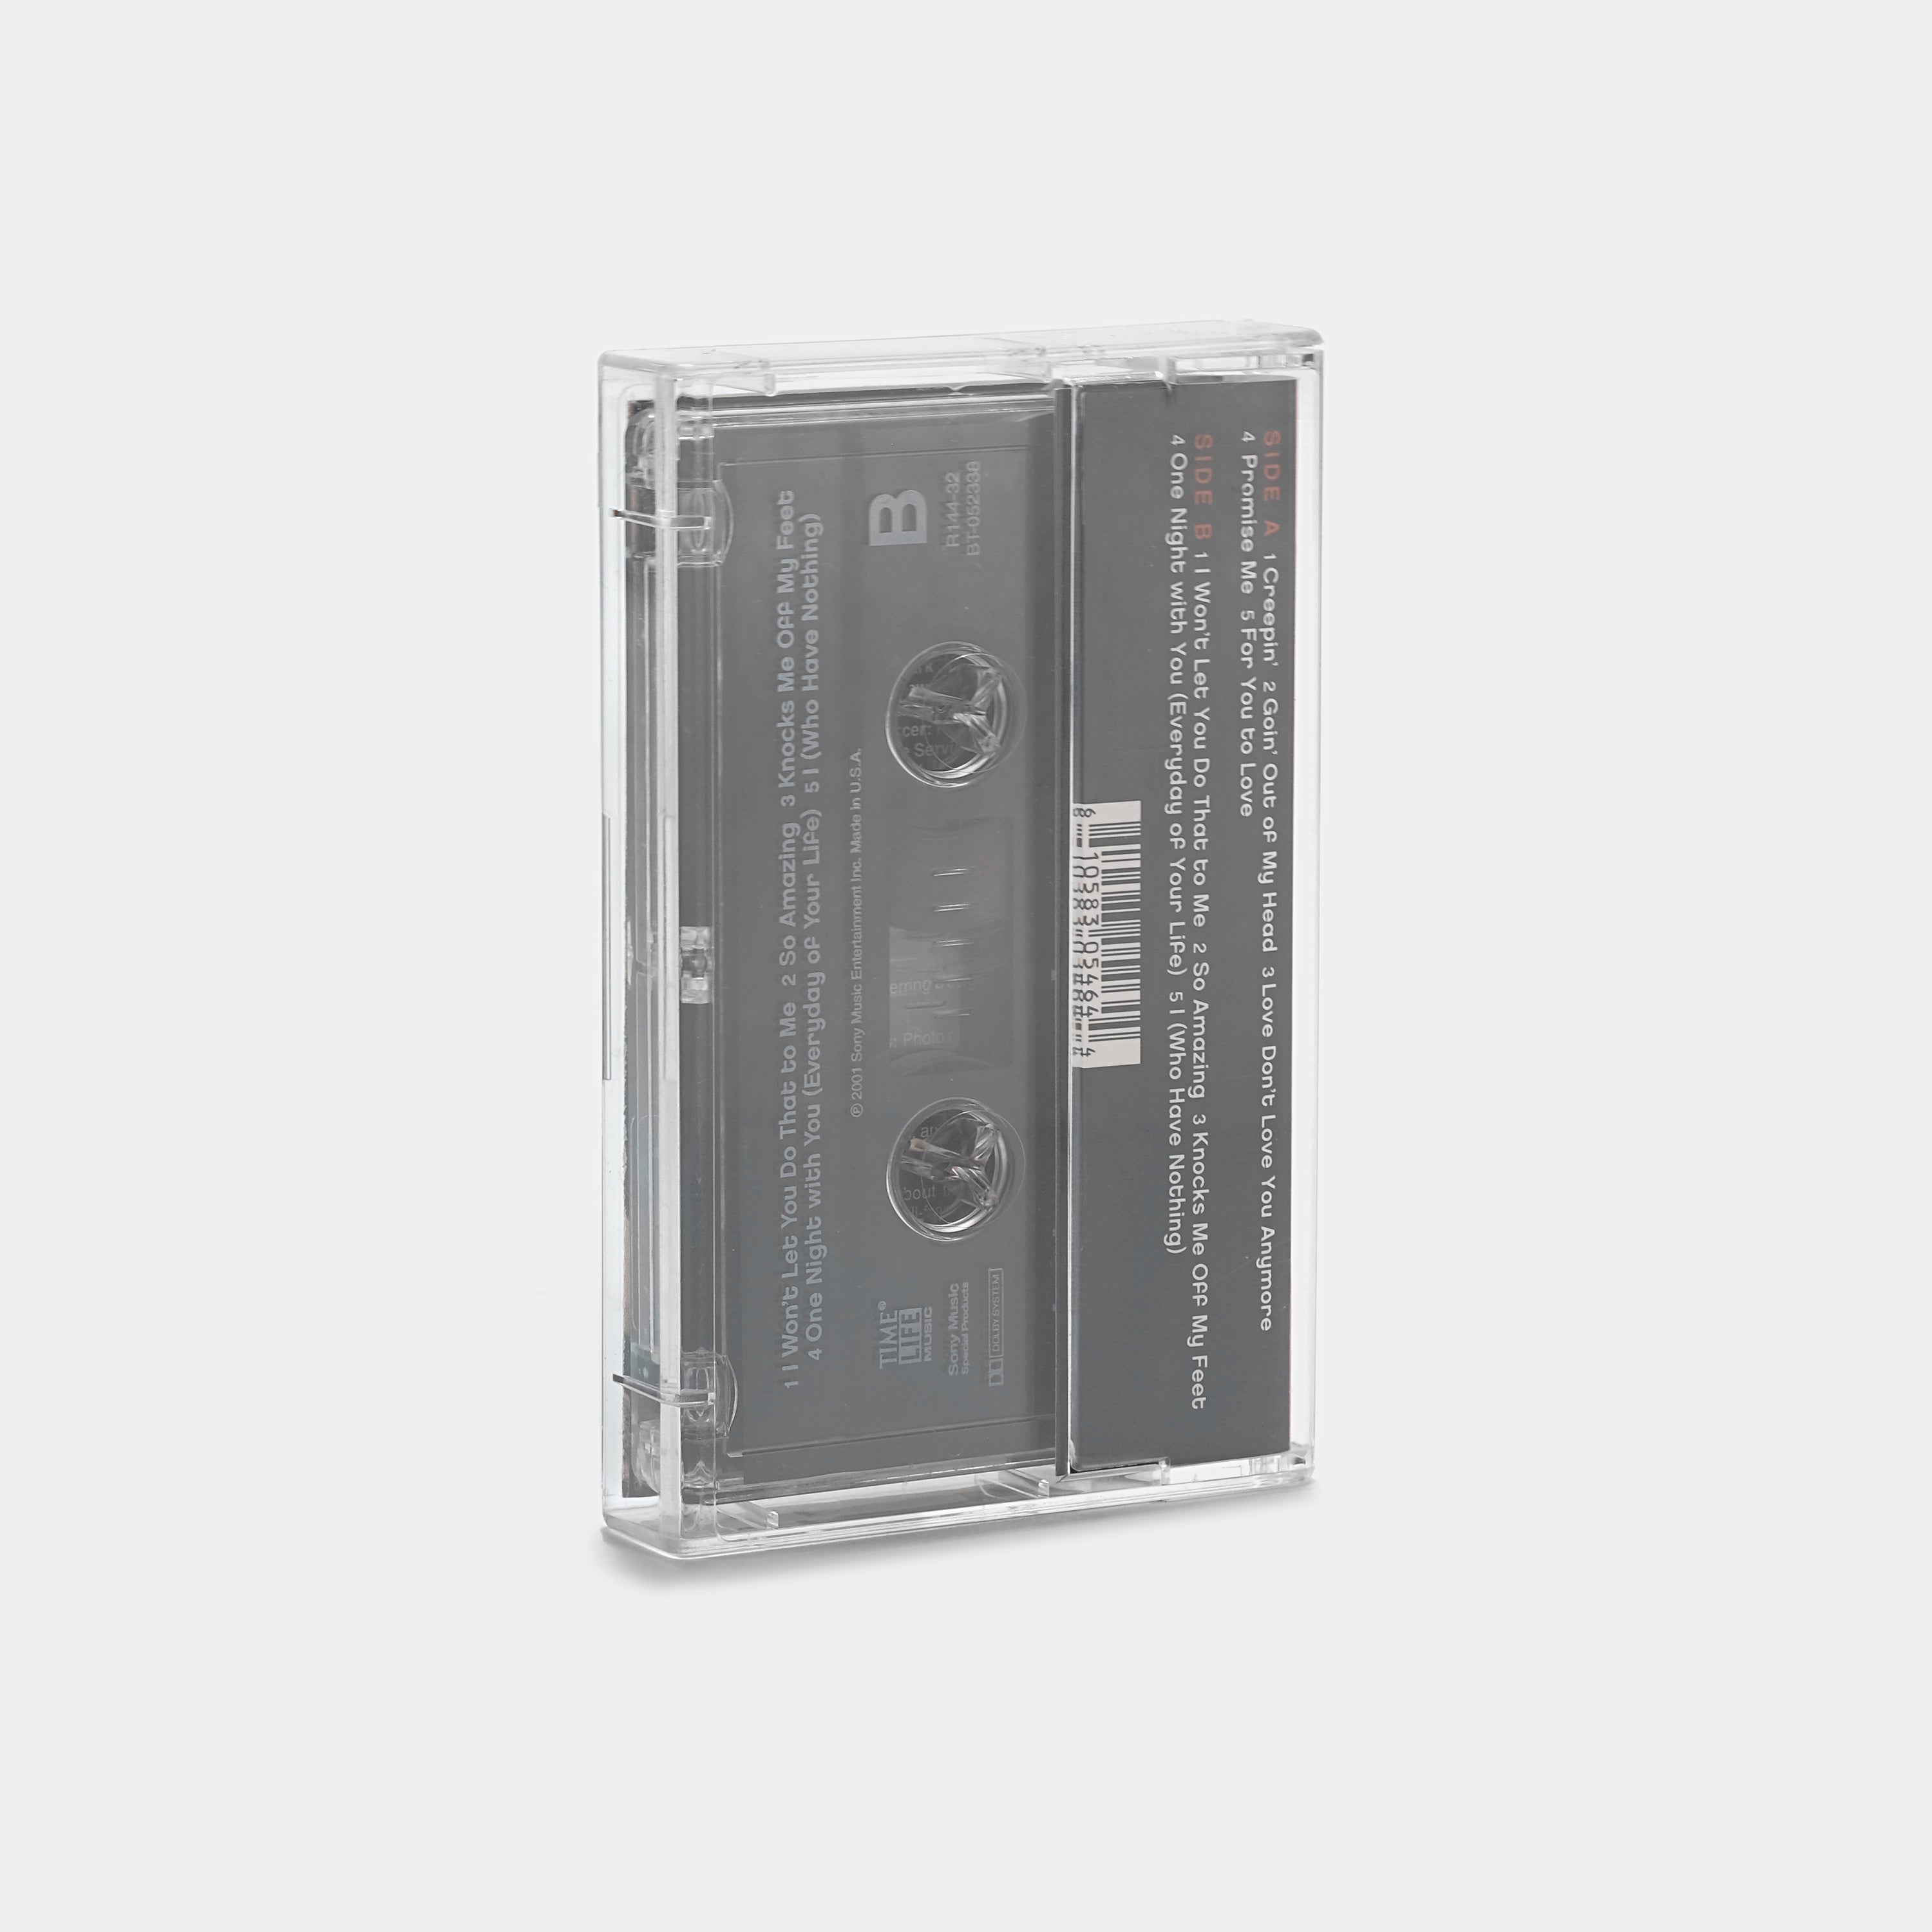 Luther Vandross - Love Ballads Cassette Tape